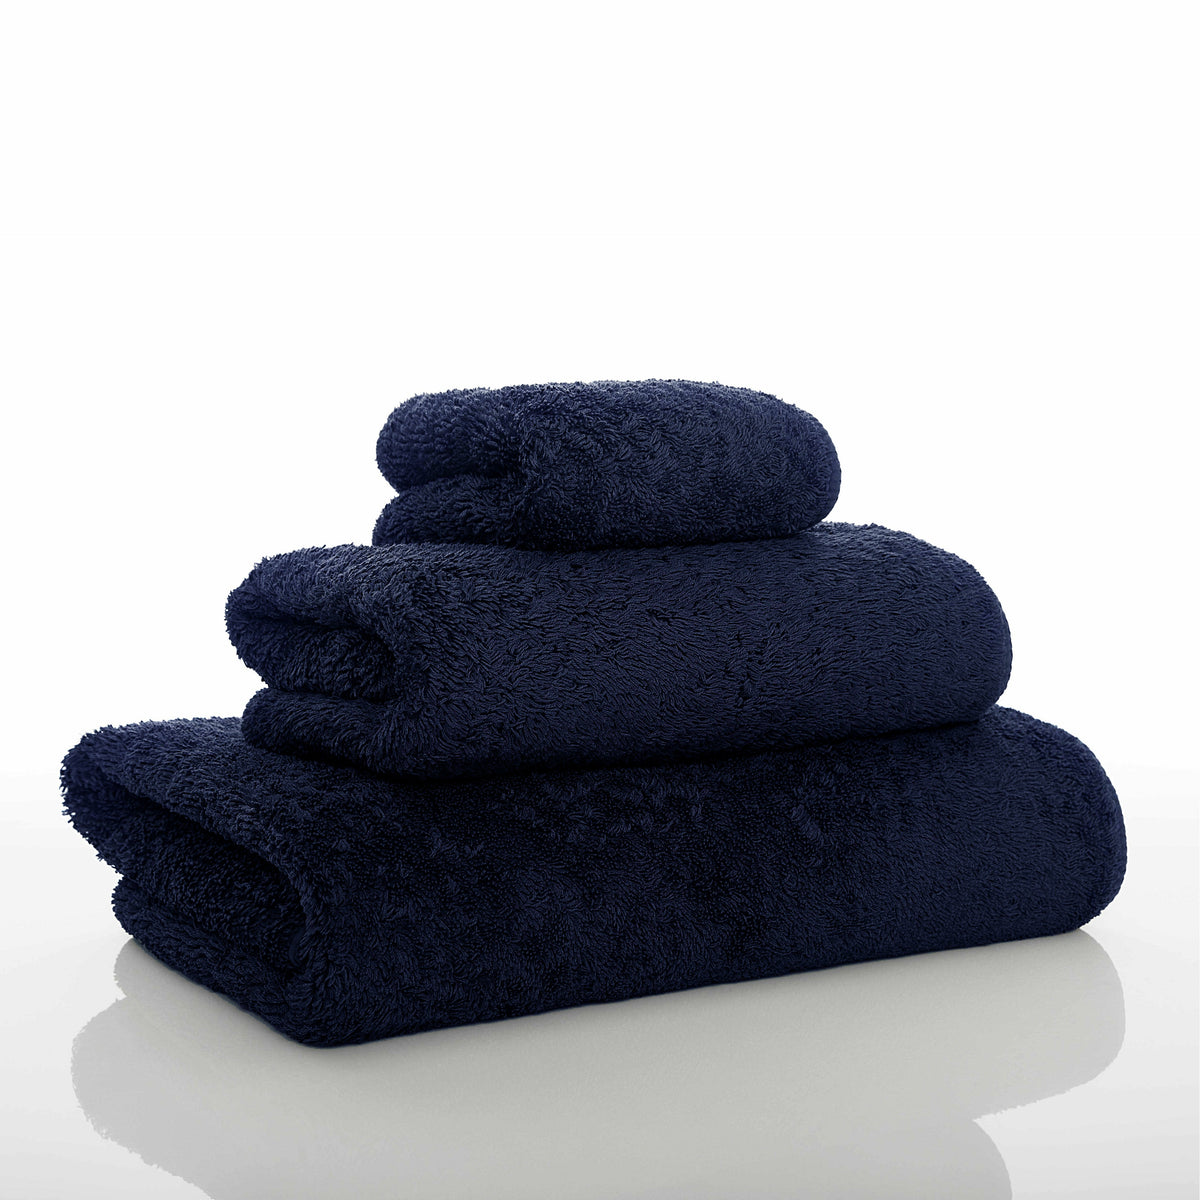 Graccioza Long Double Loop Bath Towels Stack Oxford Fine Linens